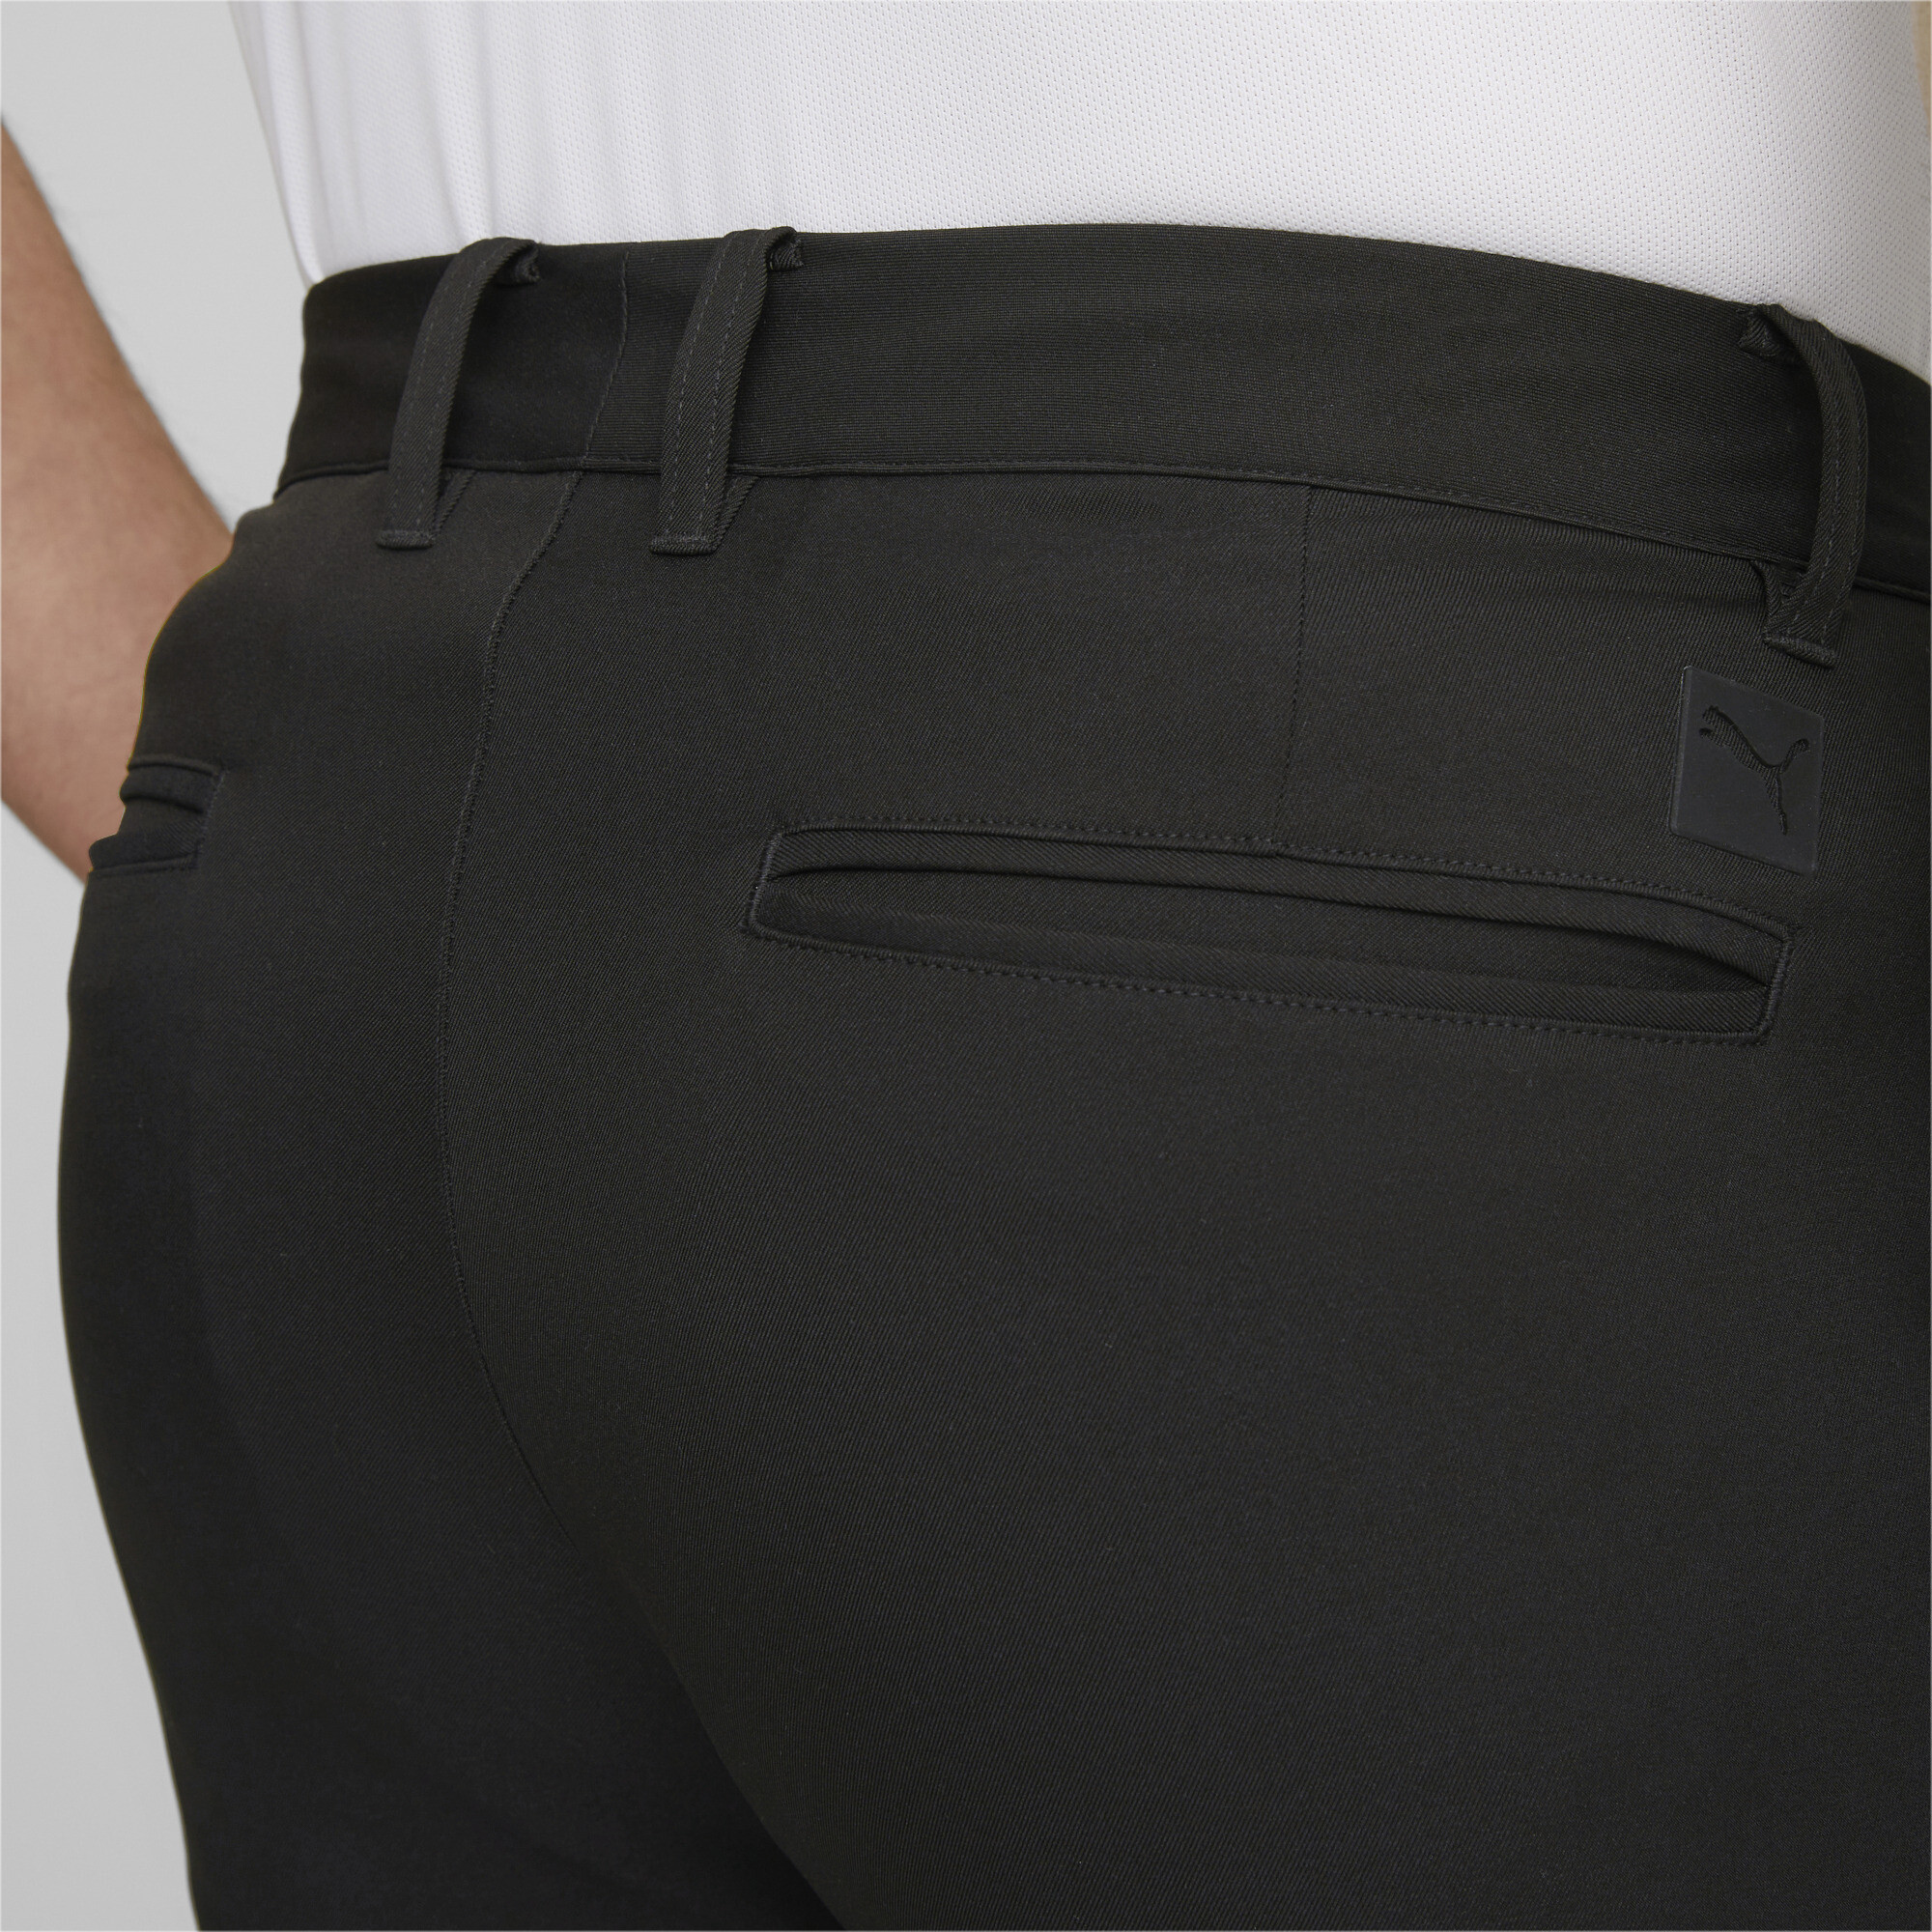 Men's Puma Dealer Golf Pants, Black, Size 32/32, Clothing